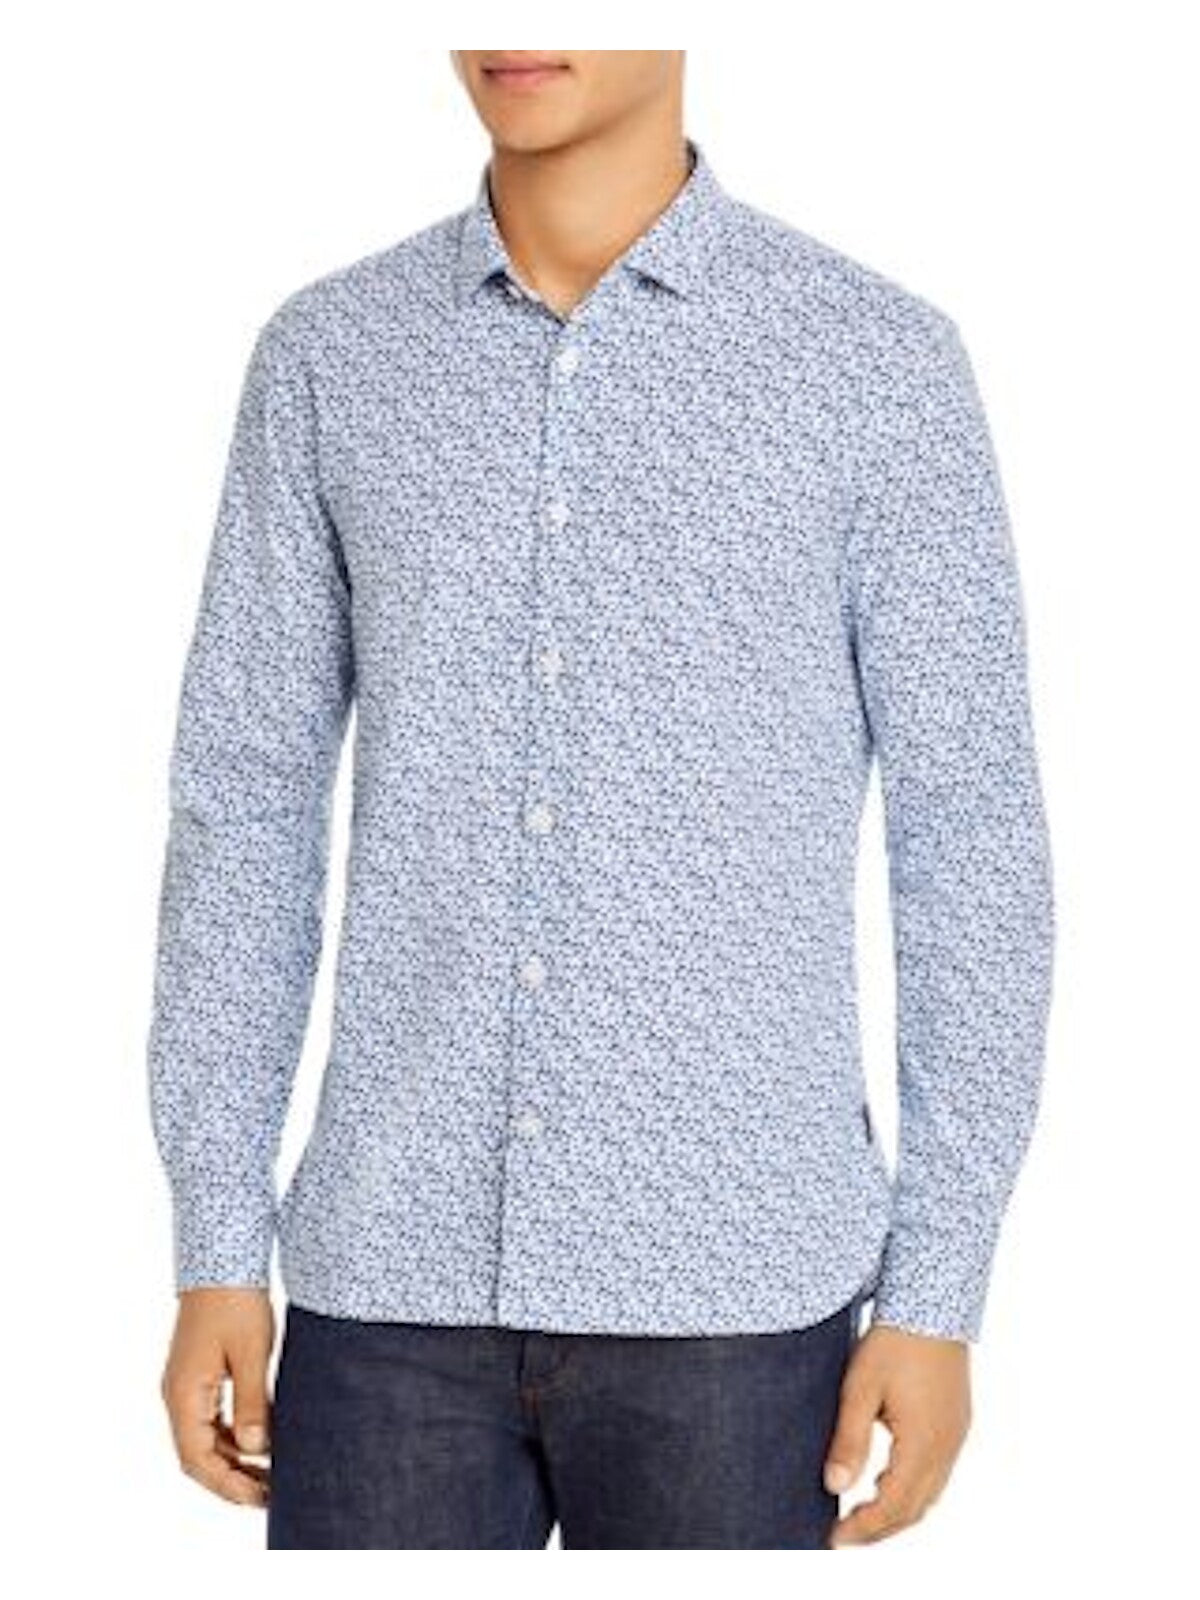 John Varvatos Mens Blue Floral Button Down Cotton Blend Casual Shirt XXL